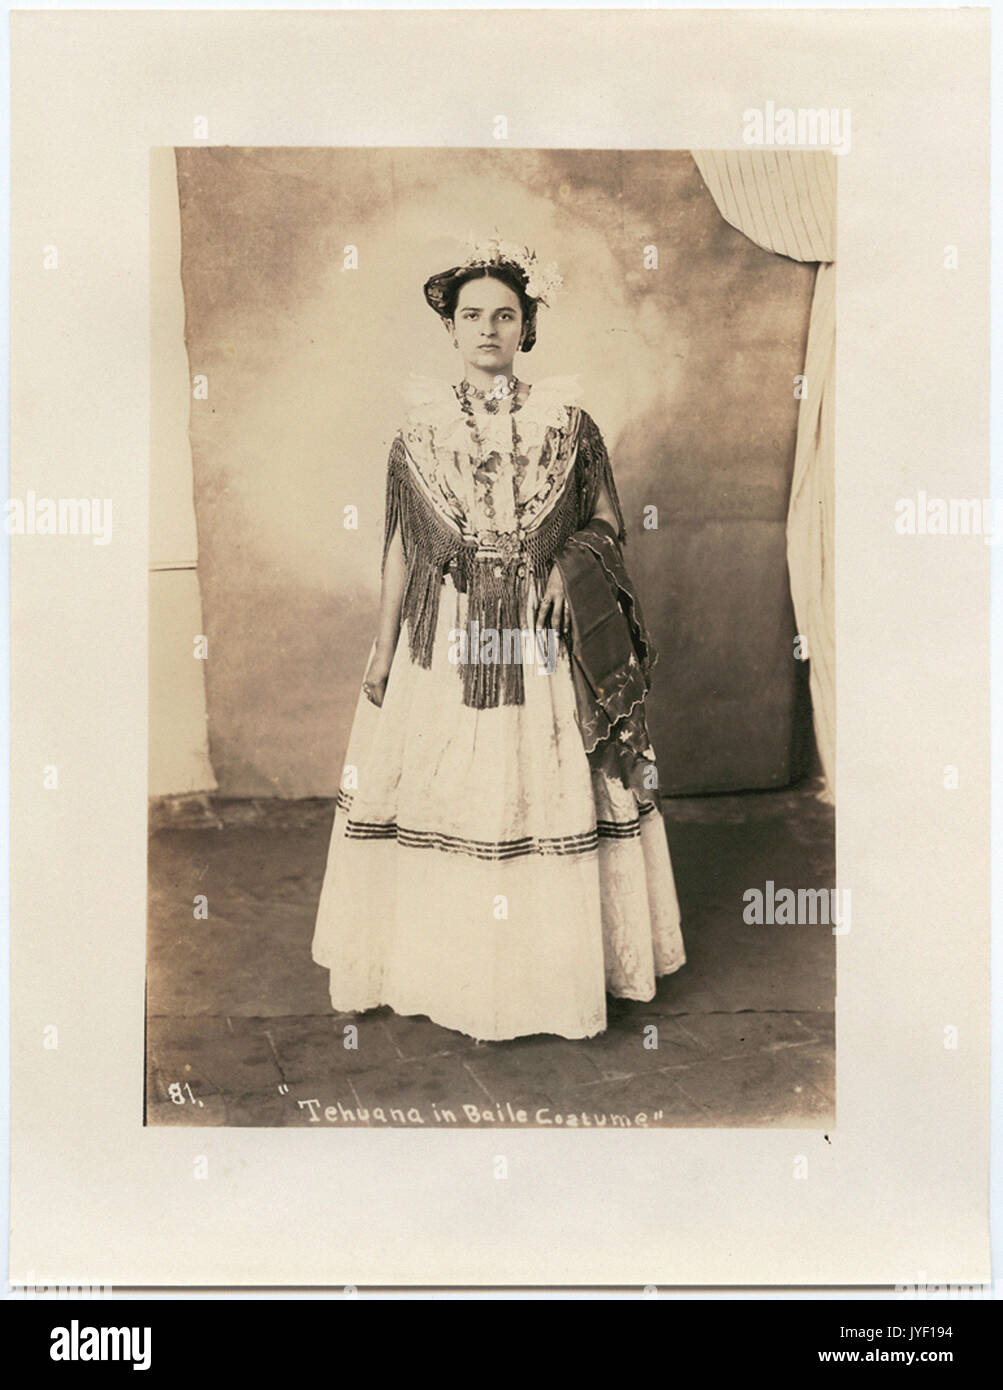 Tehuana in baile costume Stock Photo